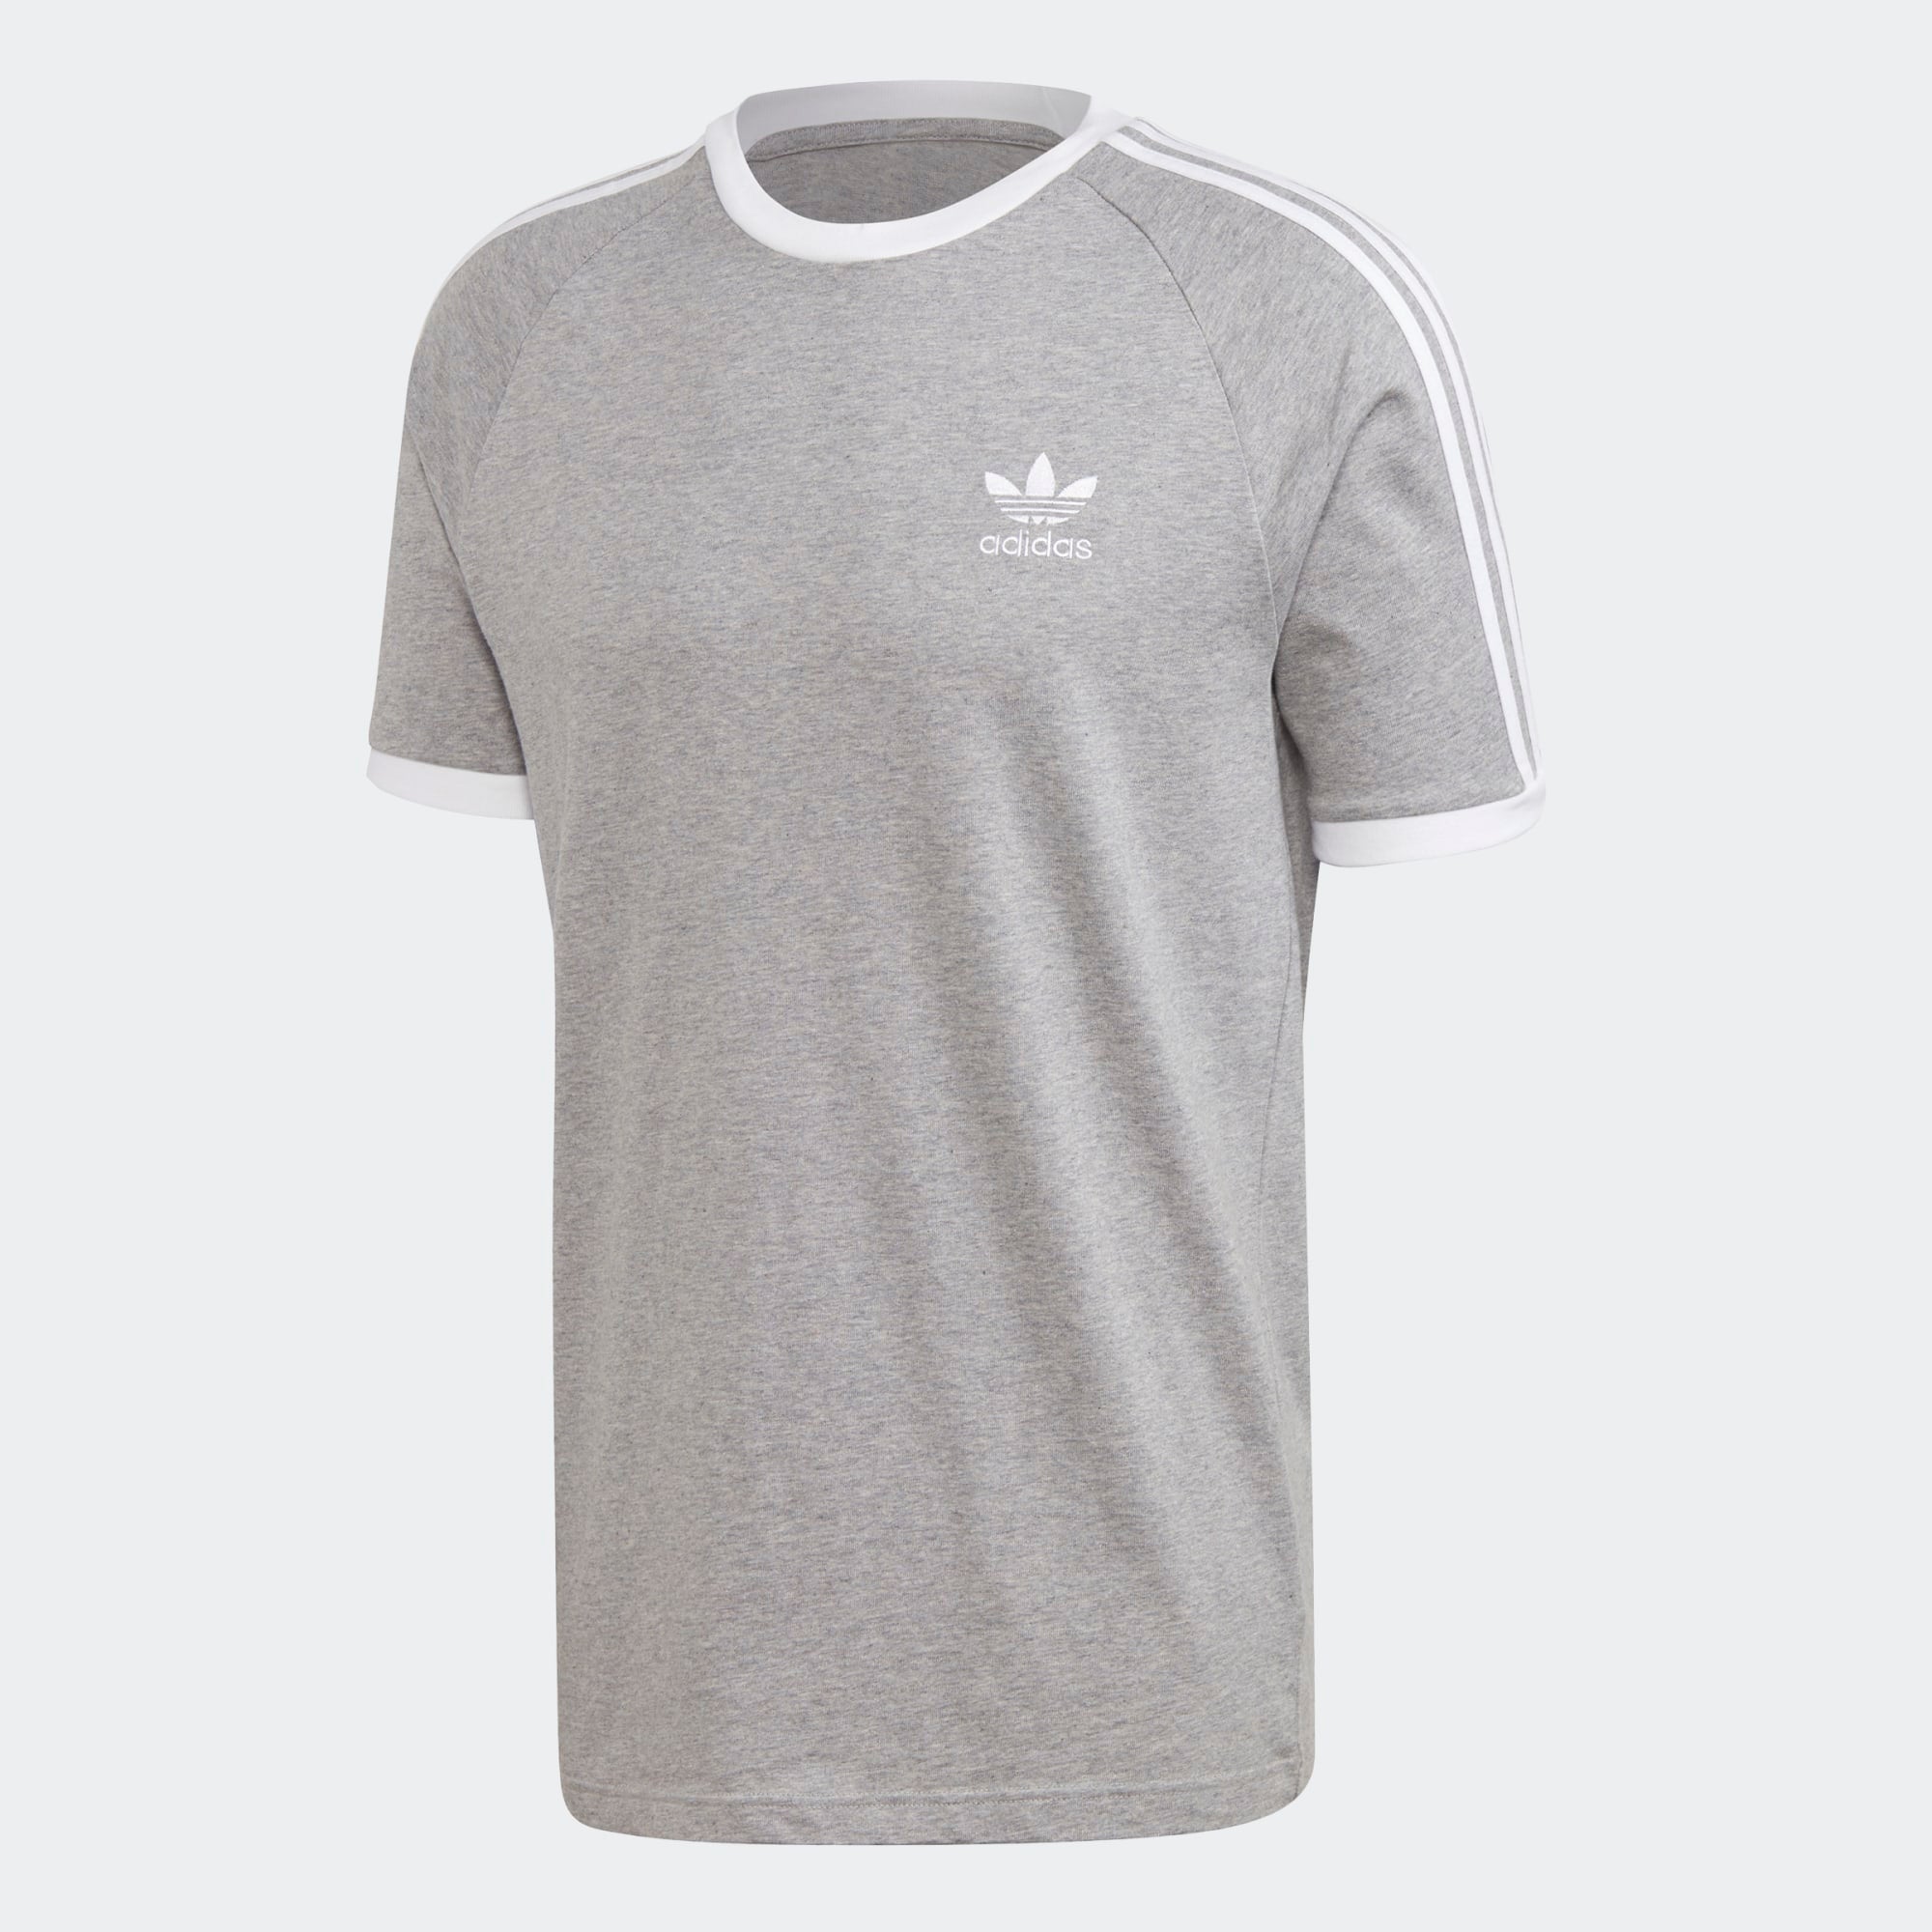 T-Shirt Men\'s 3 Originals adidas FM3769 Stripe - Sports Trade Trefoil Grey -